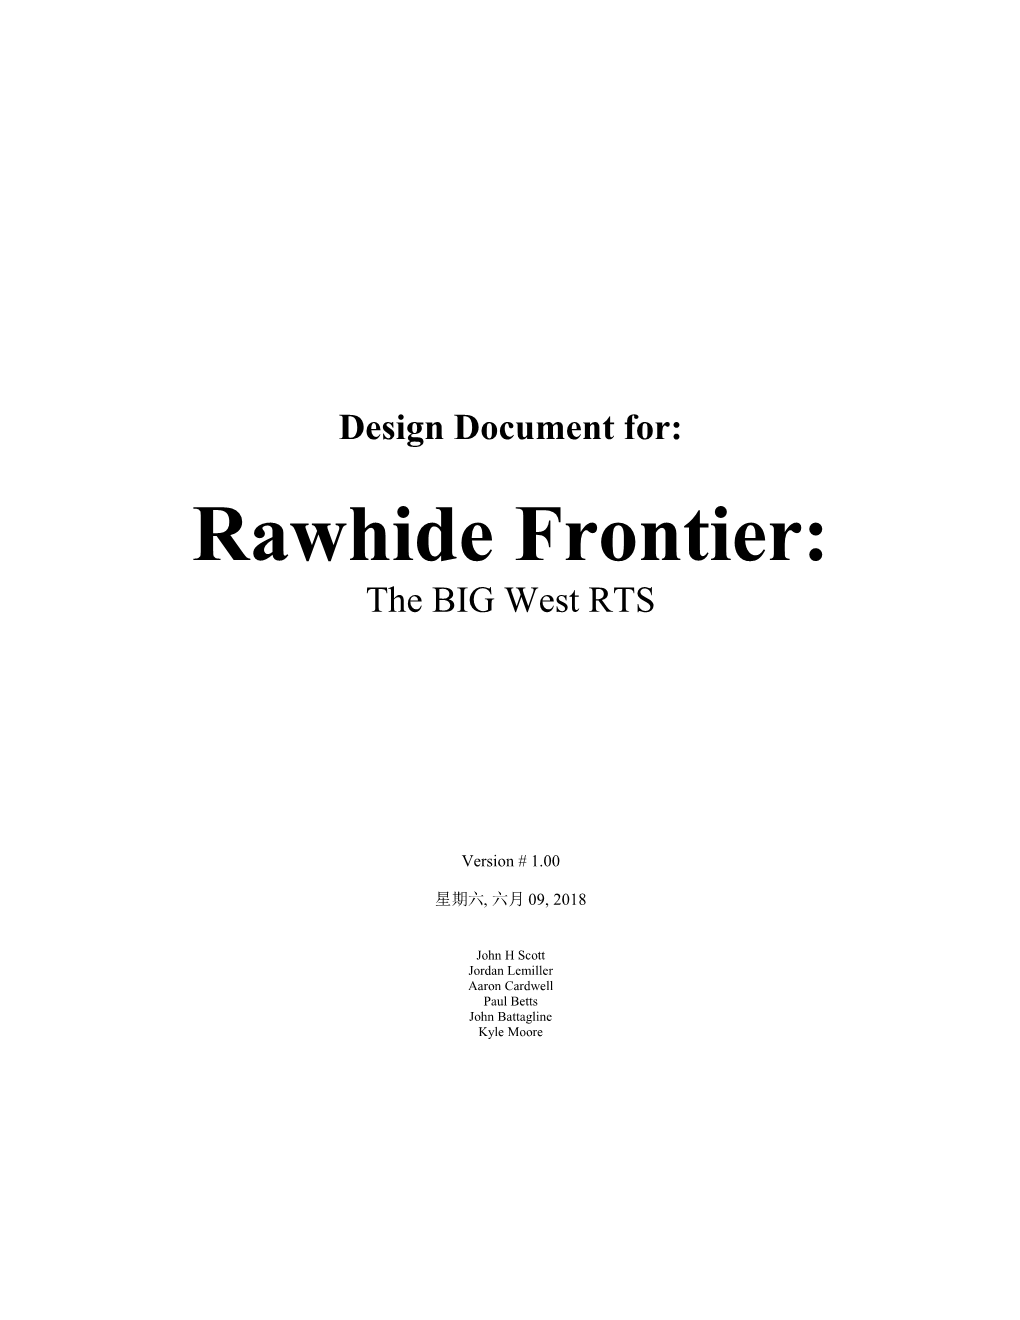 Spring 2006 - Rawhide Frontier CSE 788.14 Game Design